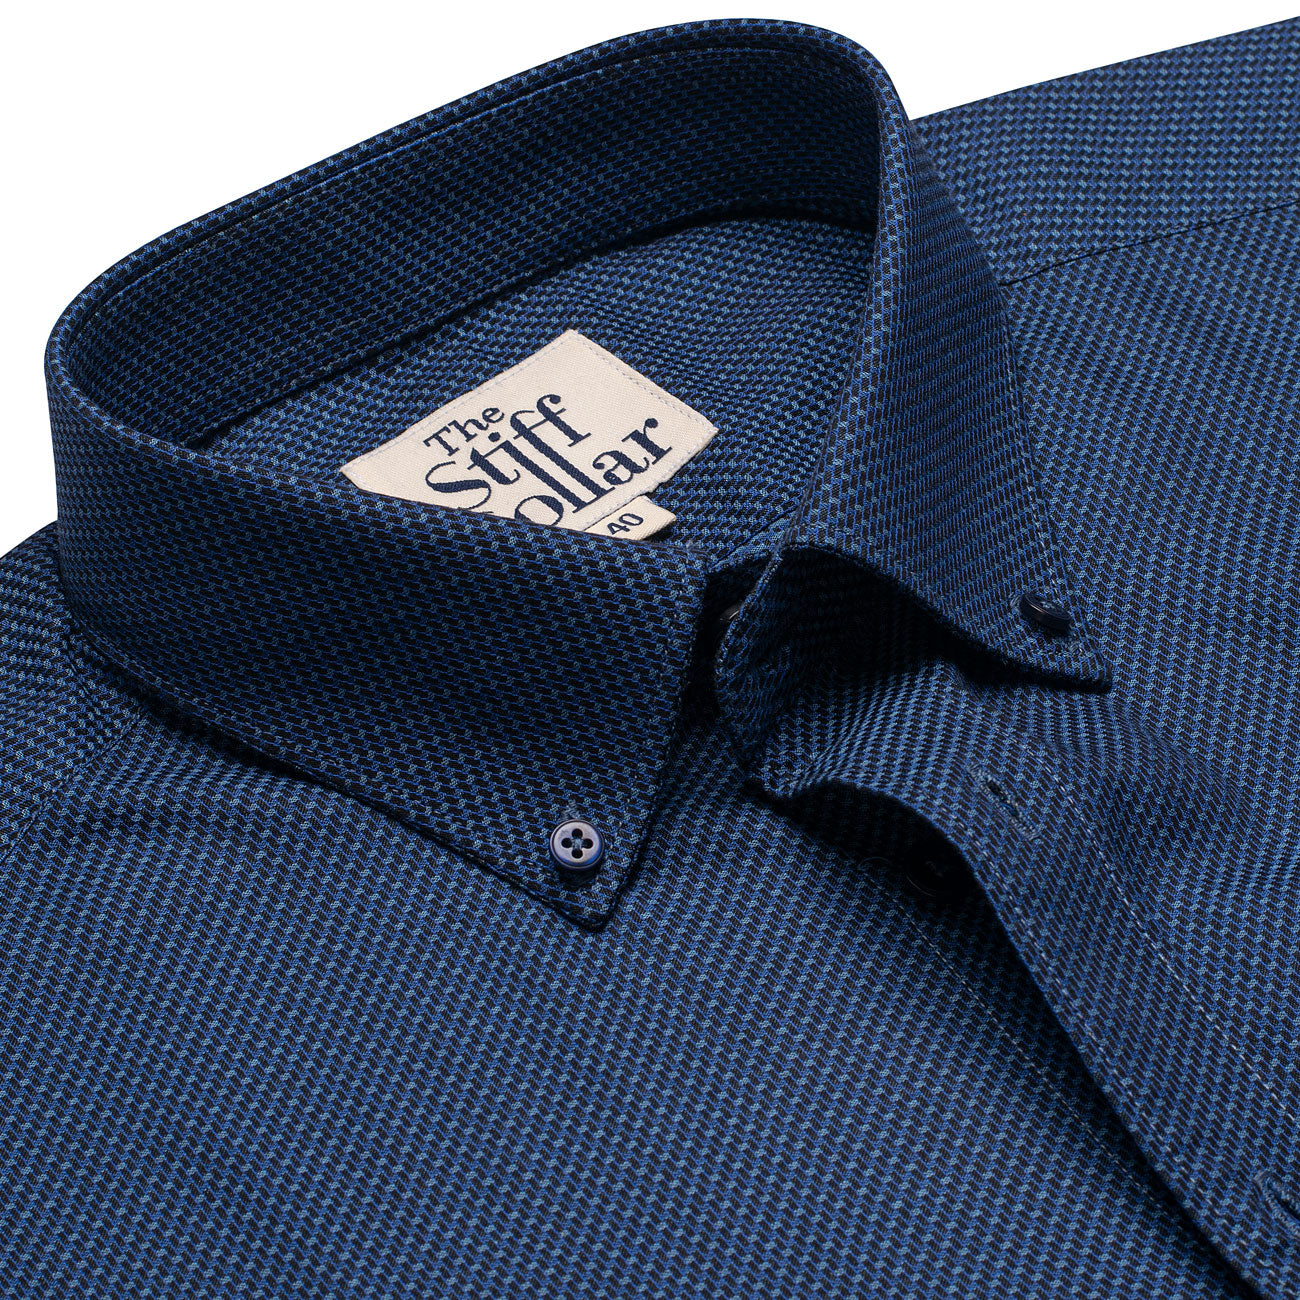 Sparkle Navy Cross Dobby Wrinkle-free Button Down 2 Ply Giza Cotton Shirt